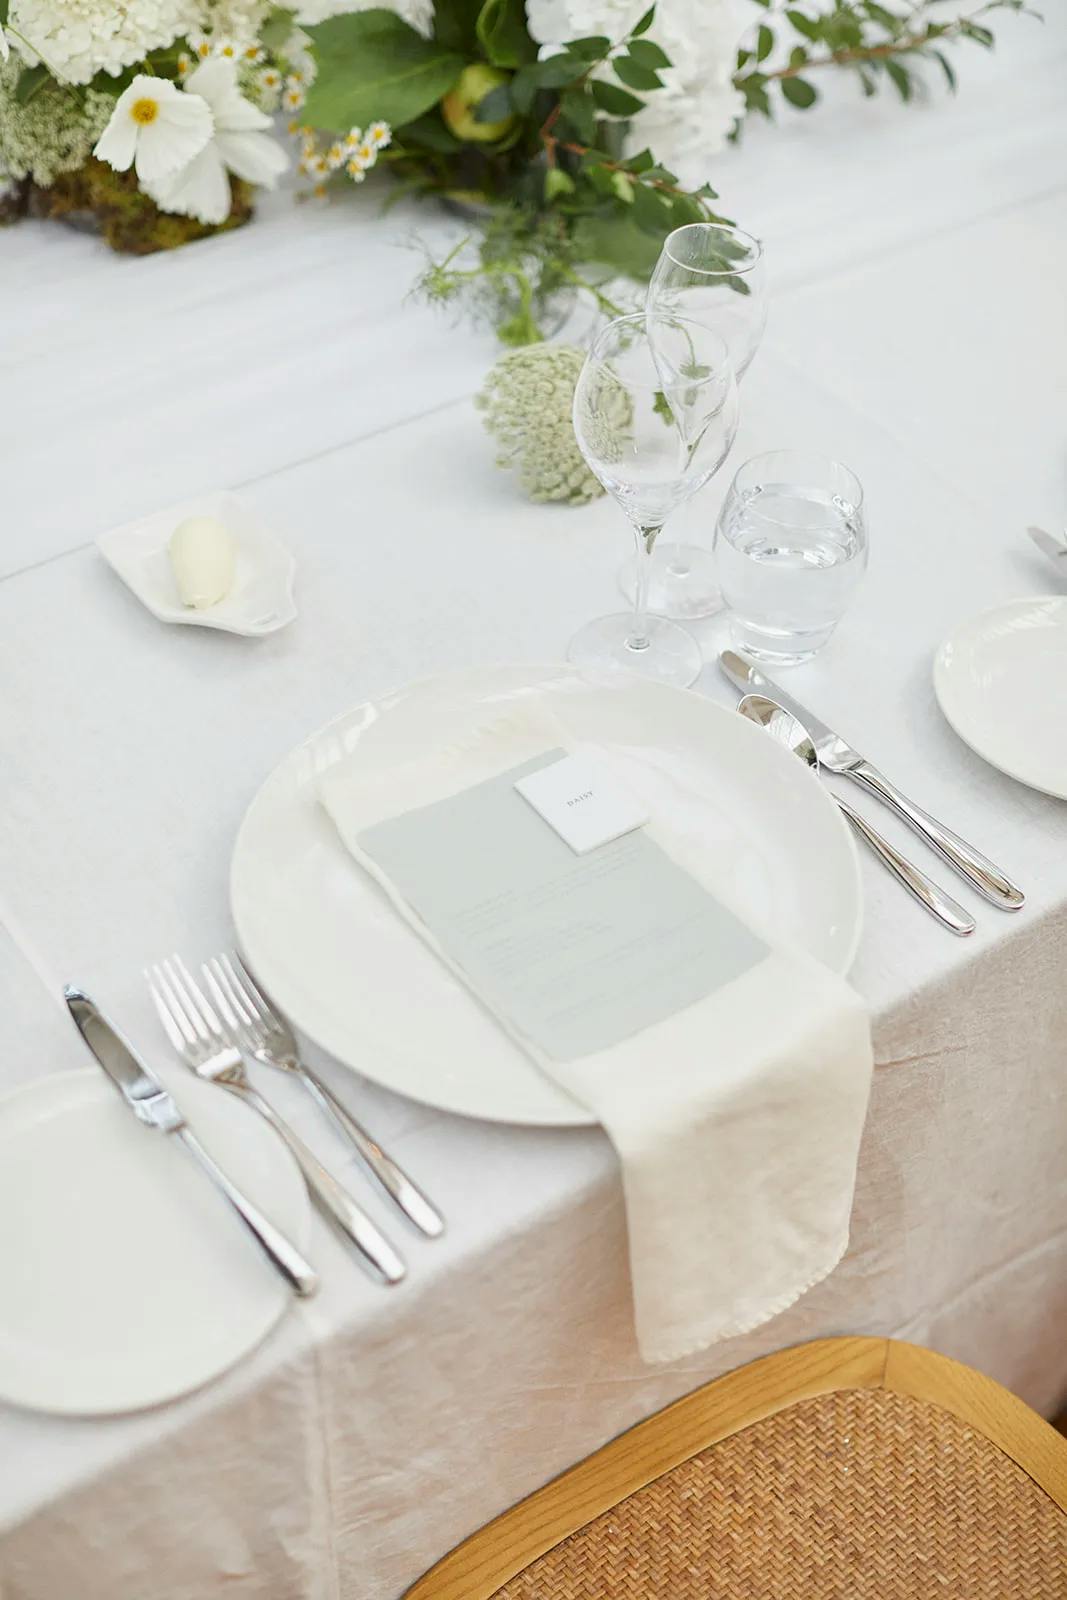 wedding setting with white linen napkins